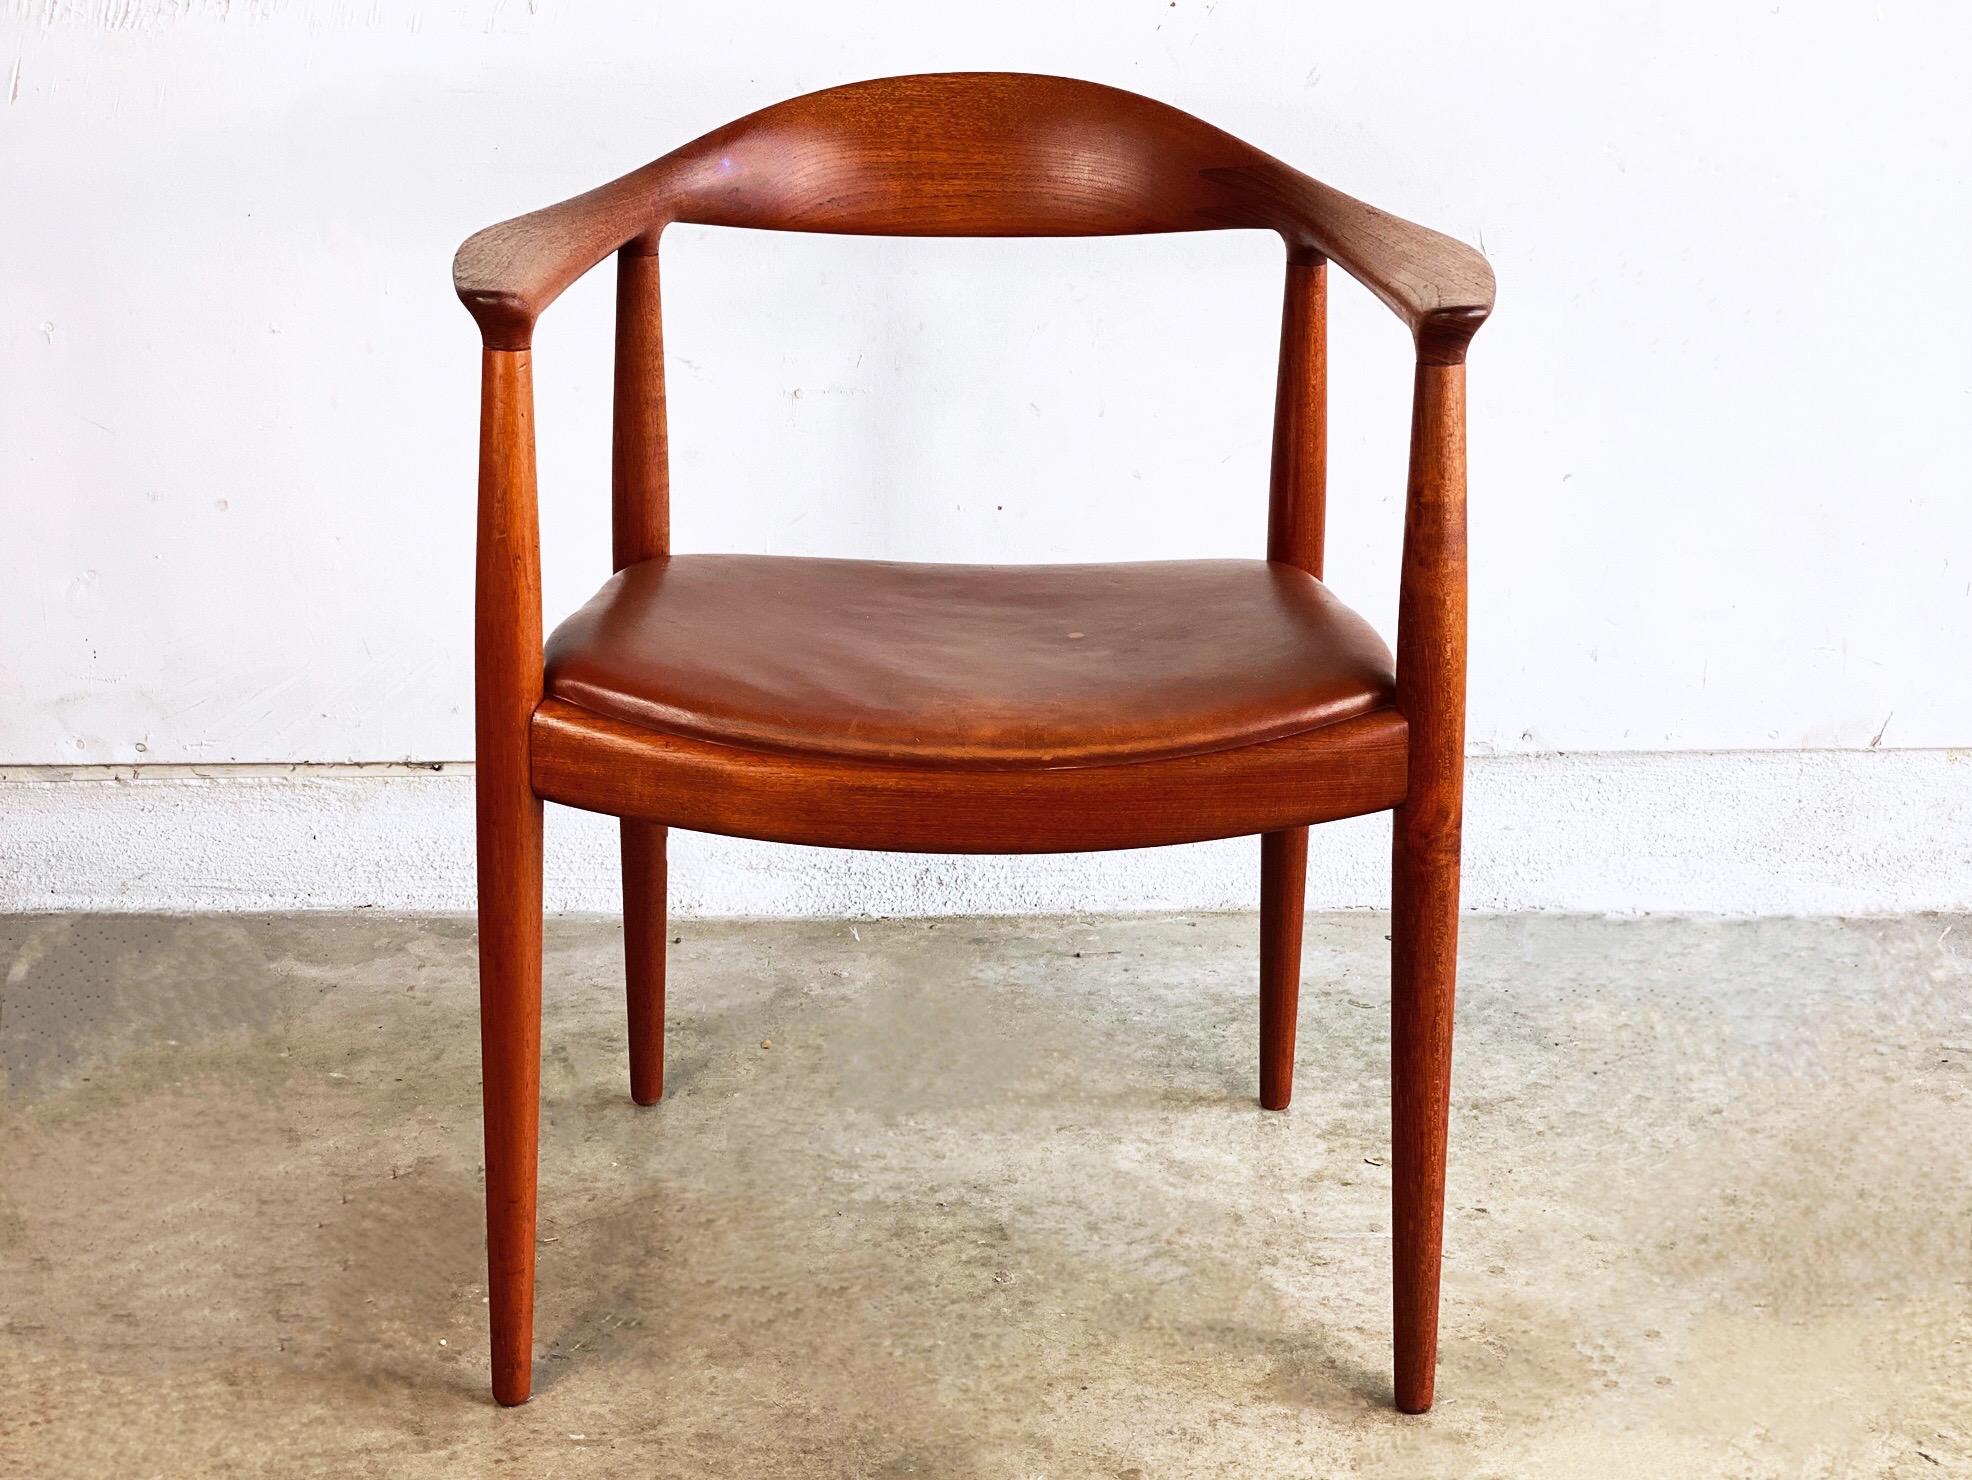 Scandinavian Modern Hans J. Wegner for Johannes Hansen Teak and Cognac Leather Round Chair